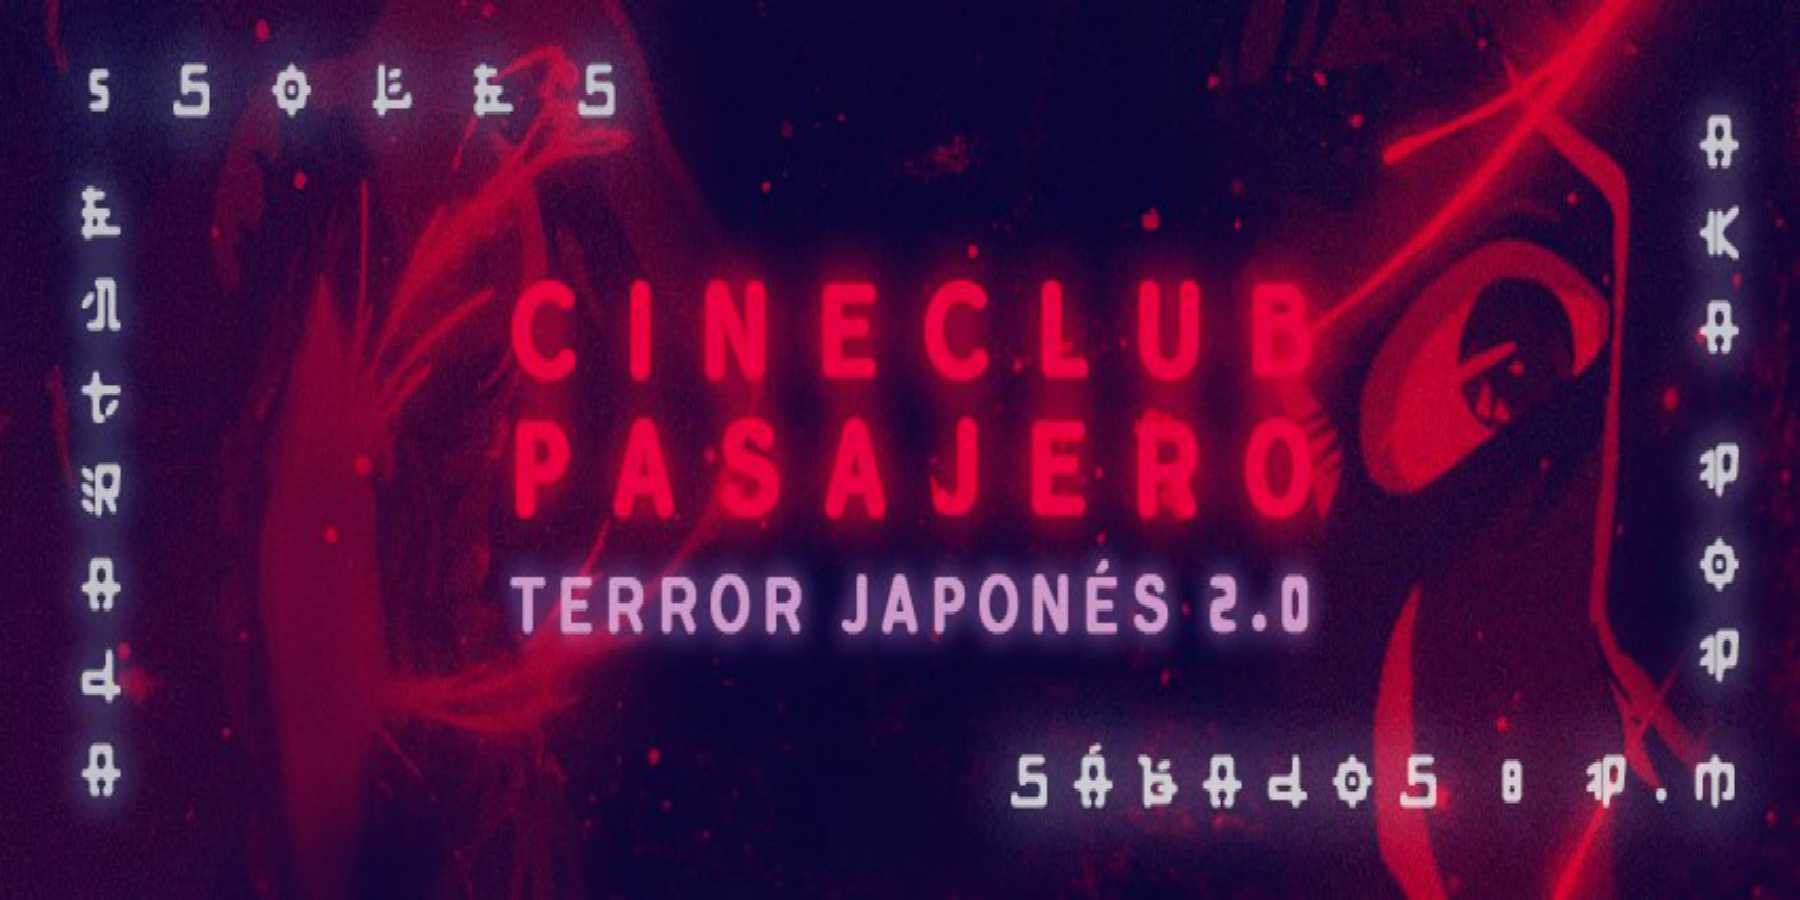 Cine Club Pasajero presenta Terror Japonés 2.0 en AKA POP